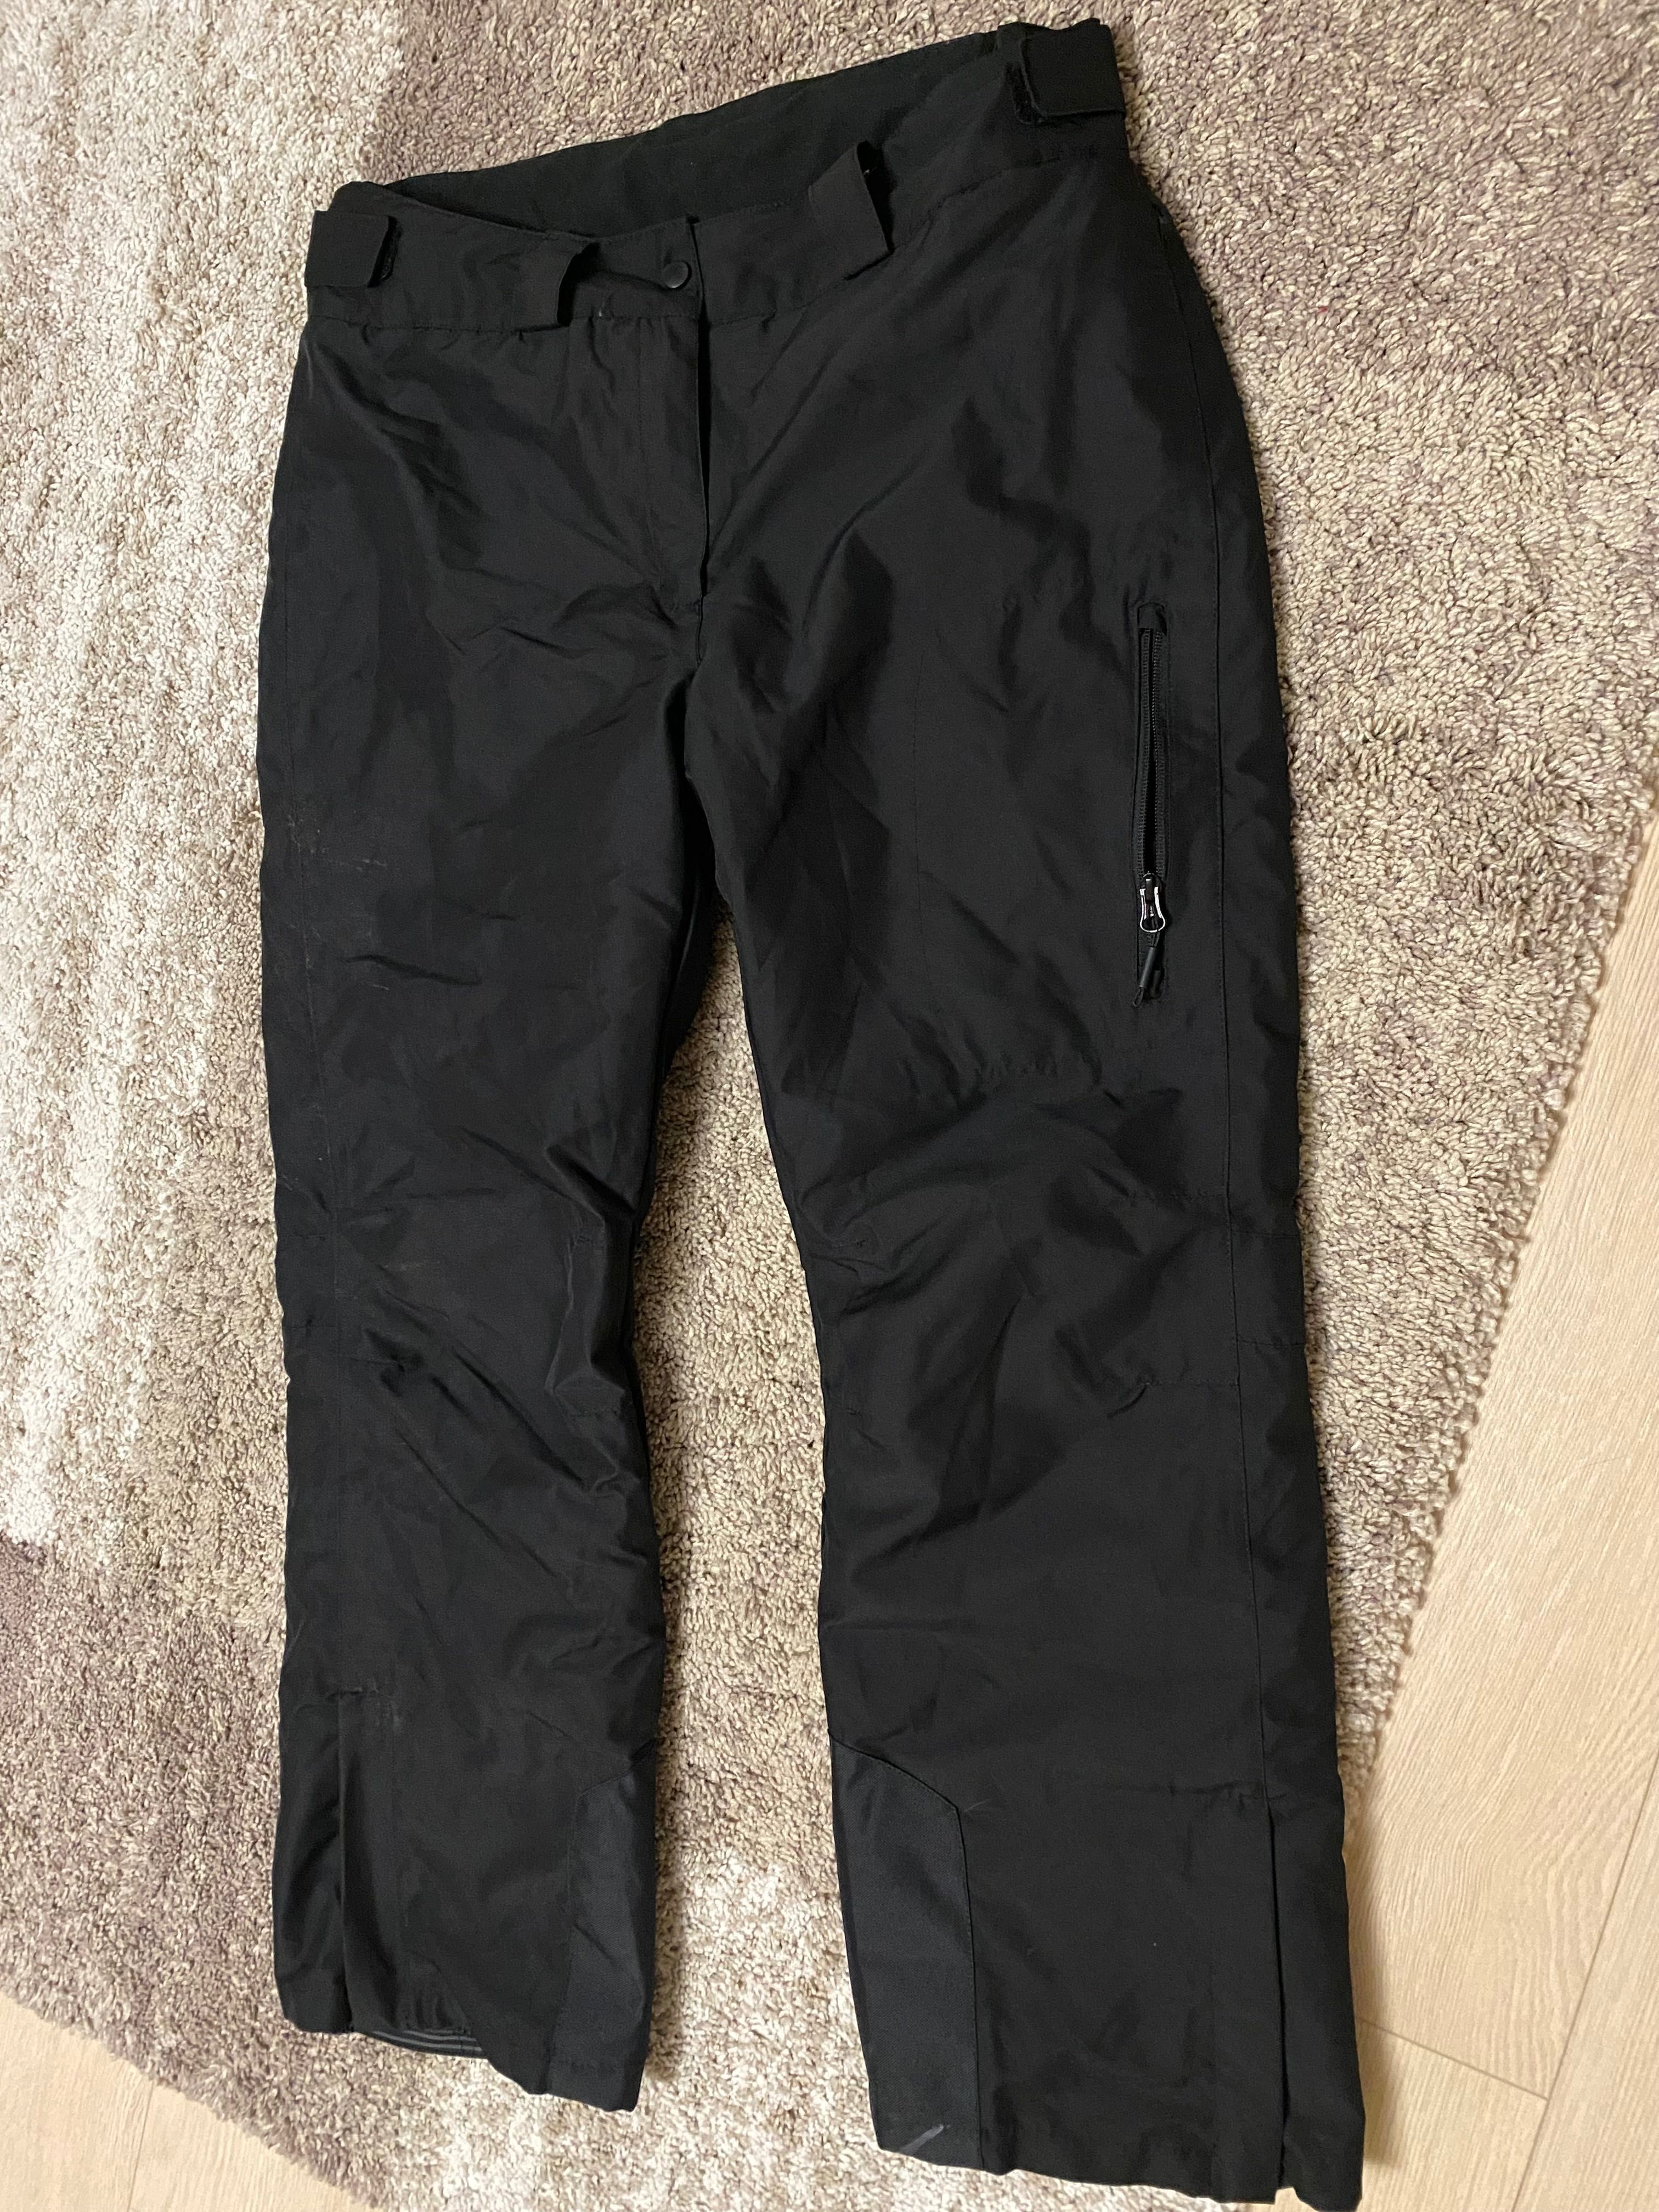 Pantaloni Ski / Snowboard barbati - negru 106cm/100cm